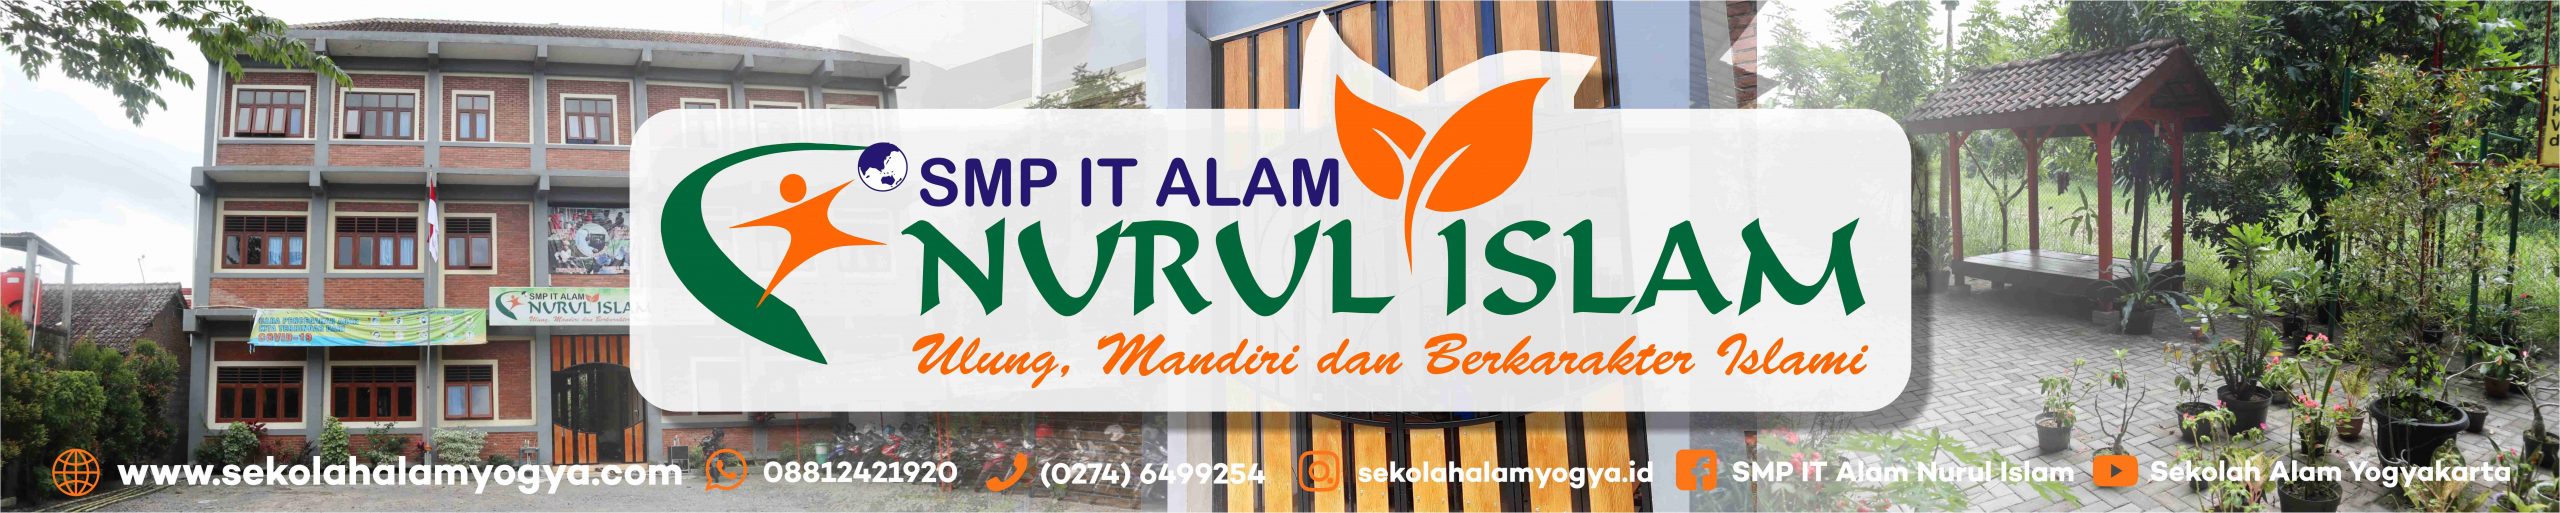 SMPIT Alam Nurul Islam Yogyakarta